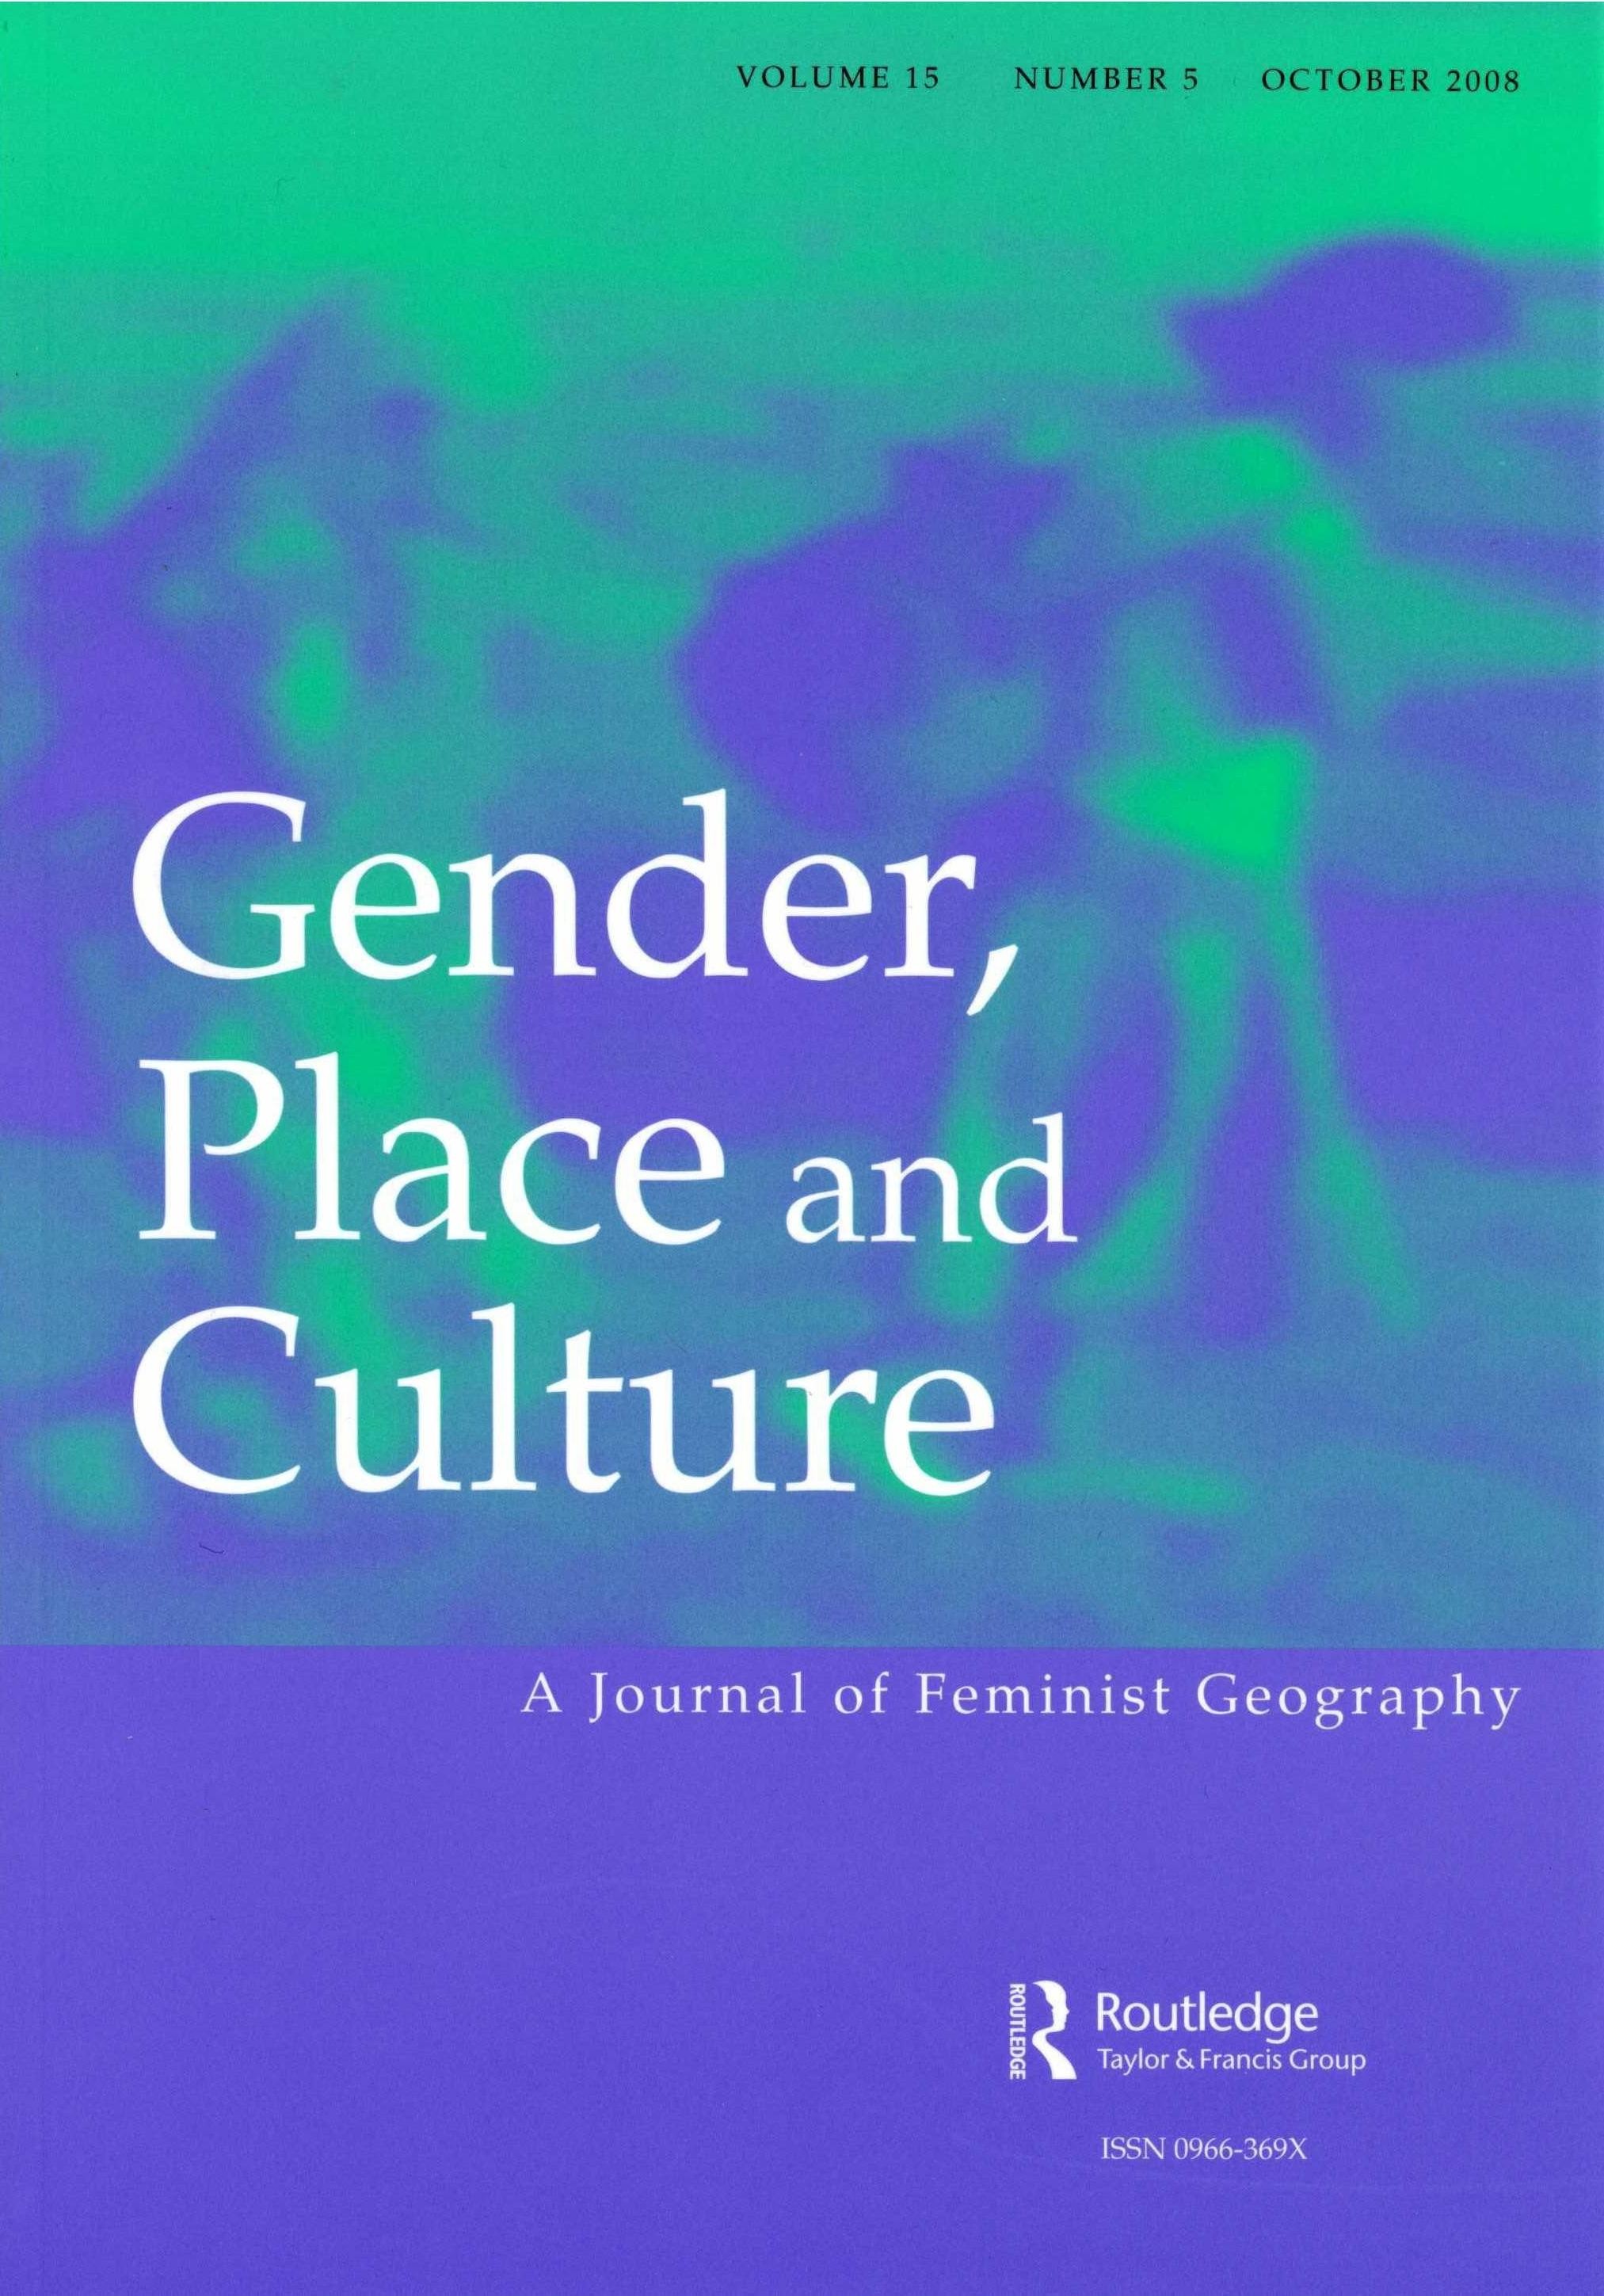 Обложка феминистского журнала Gender, Place and Culture. Фото: © Taylor & Francis